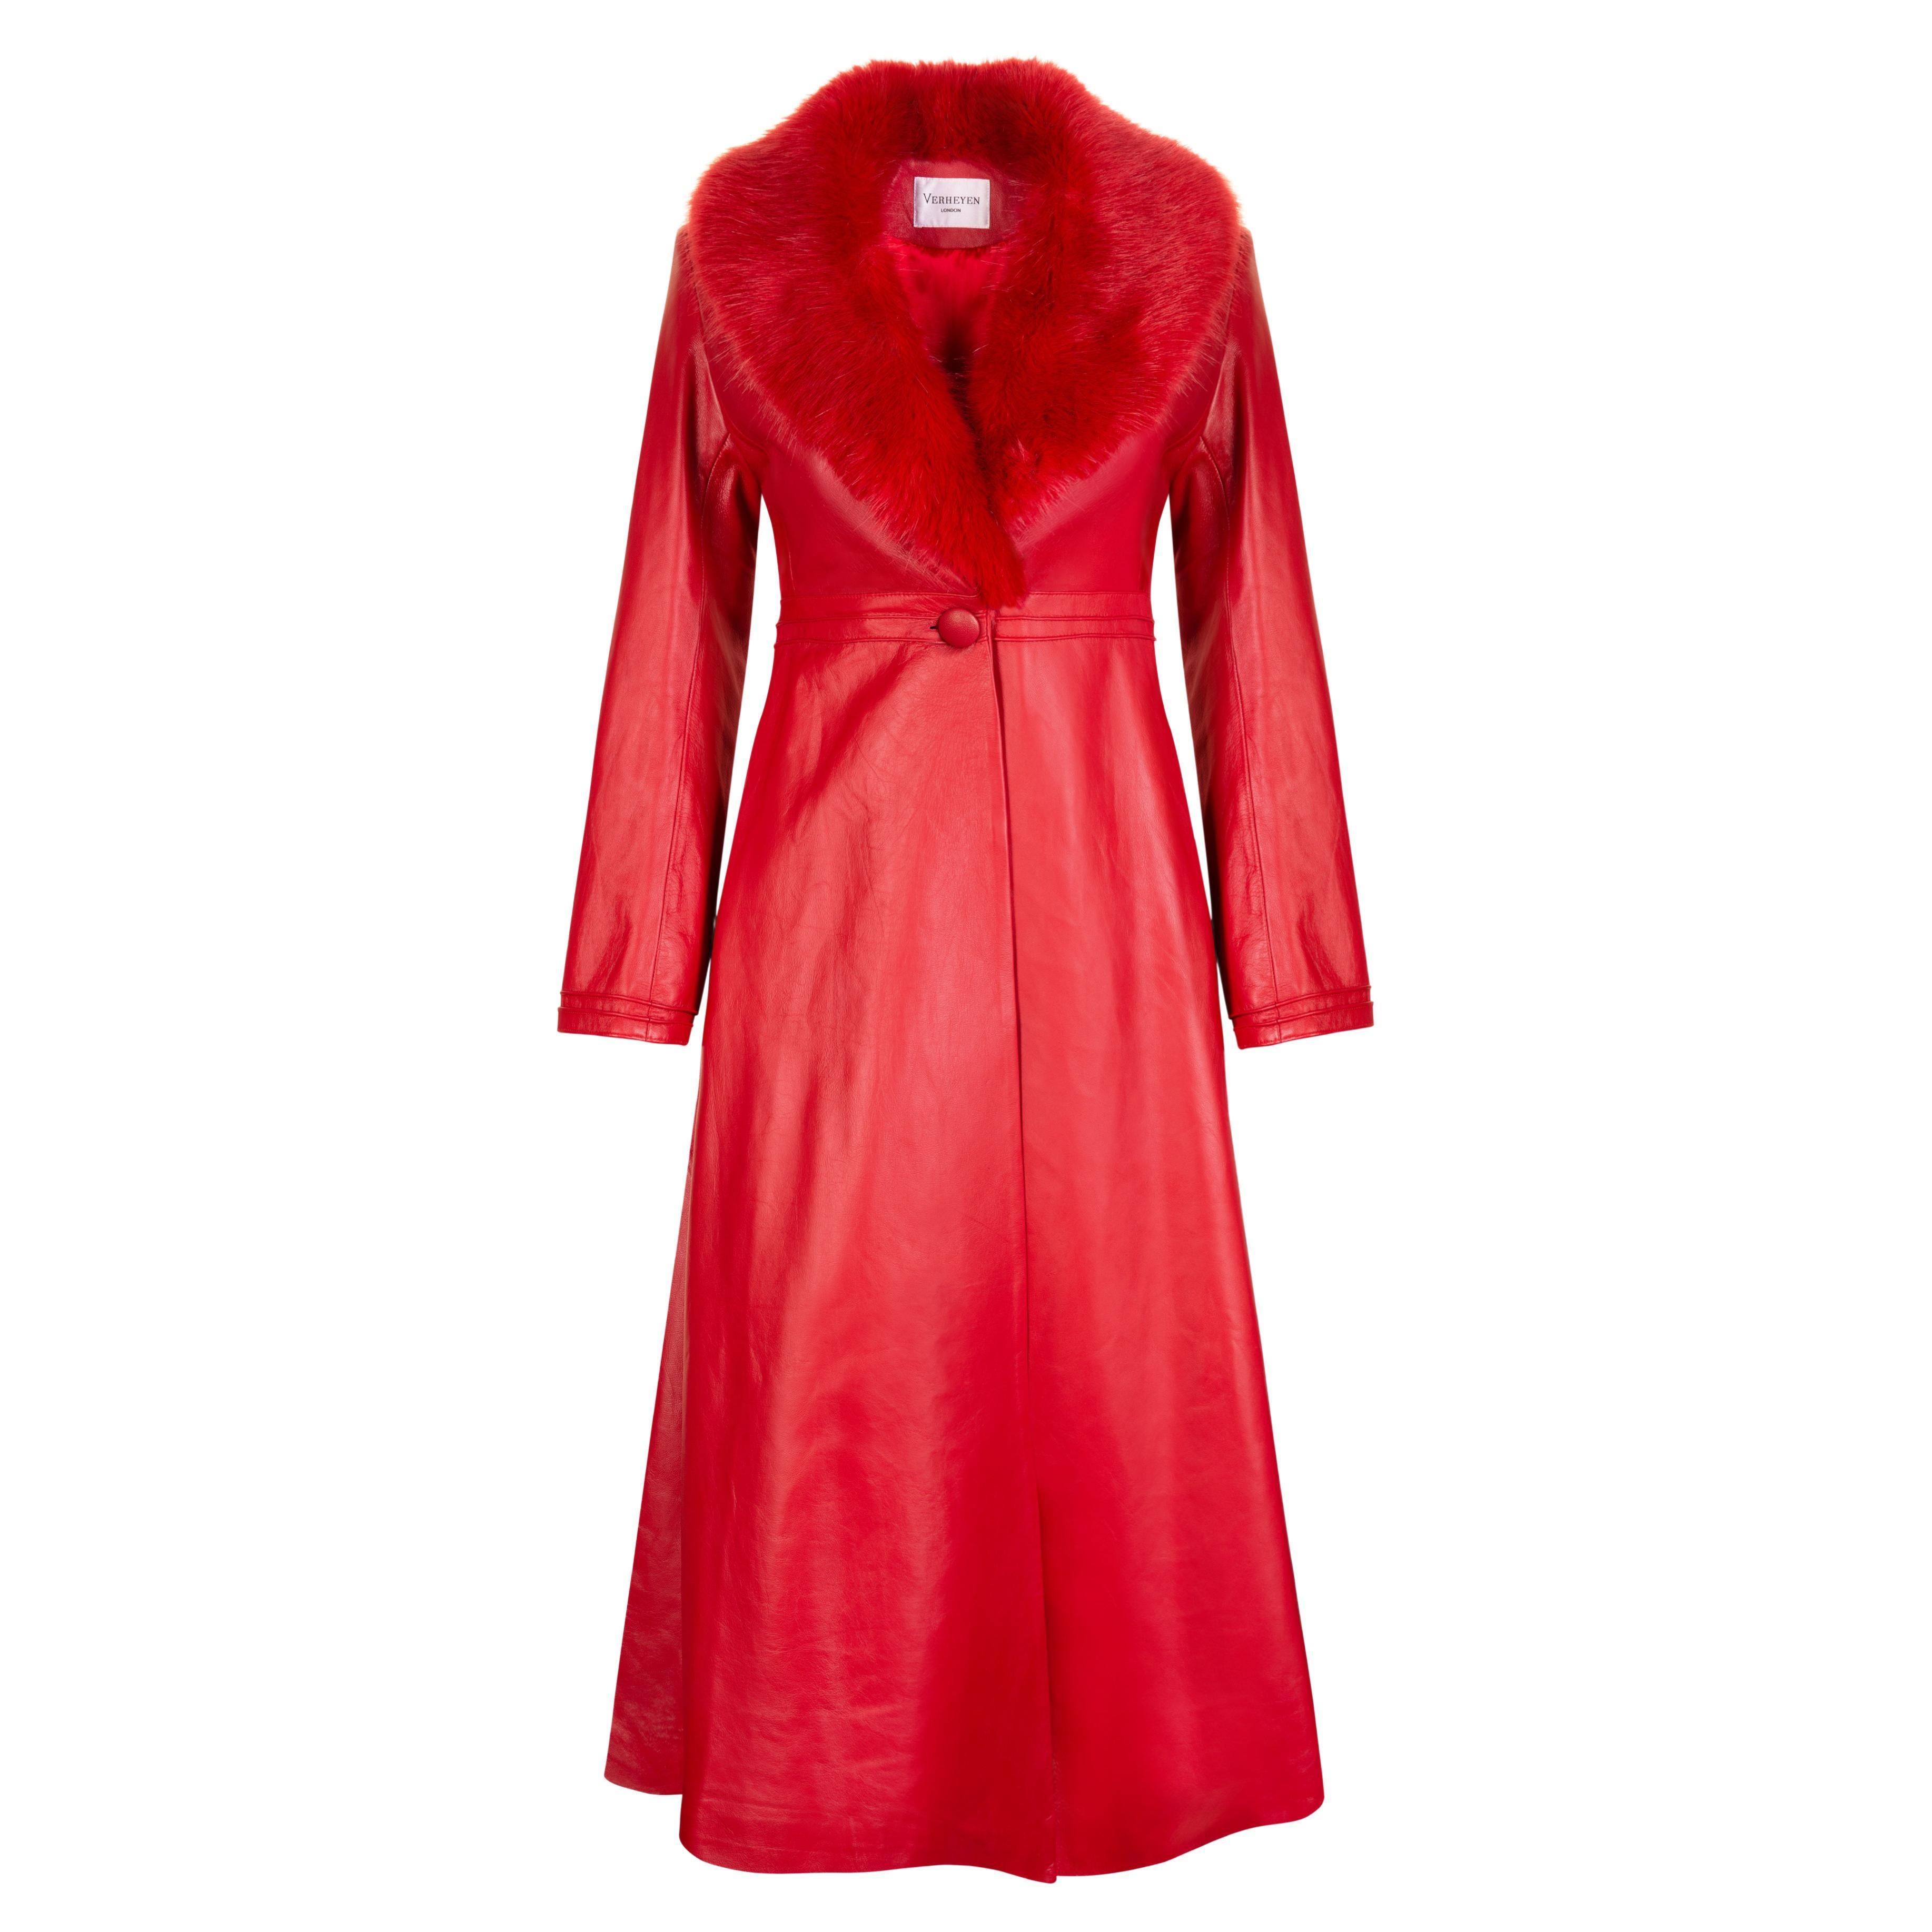 Verheyen London Edward Leather Coat with Faux Fur Collar in Red - Size uk 14